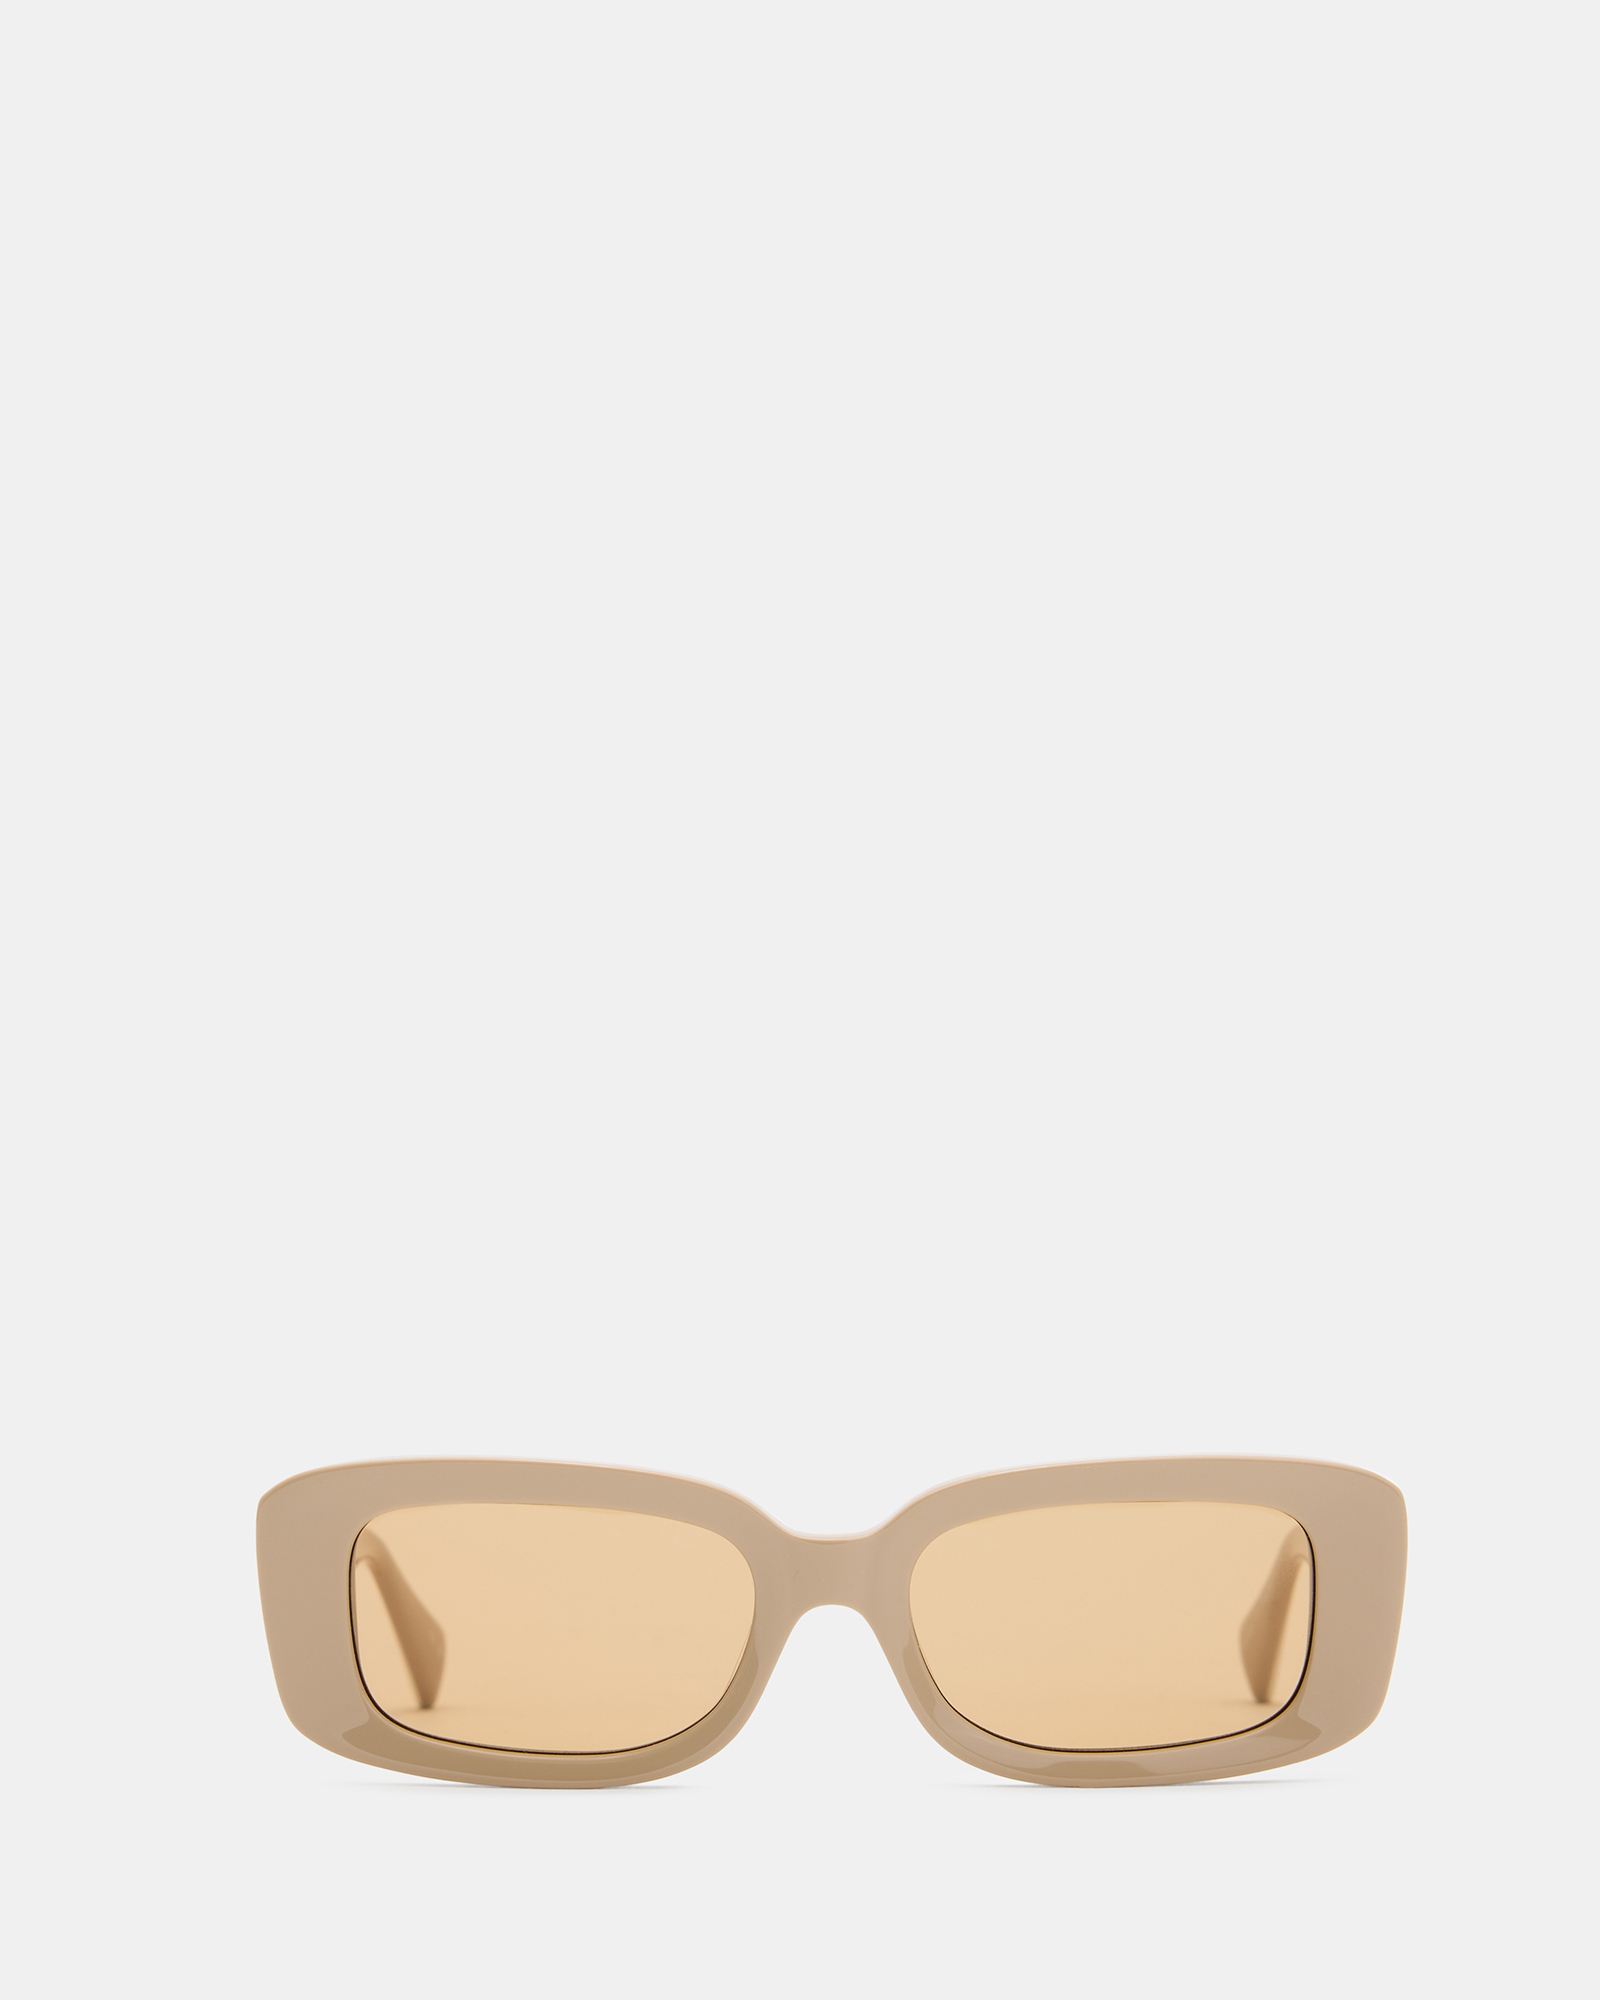 AllSaints Sonic Rectangular Shaped Sunglasses,, Taupe